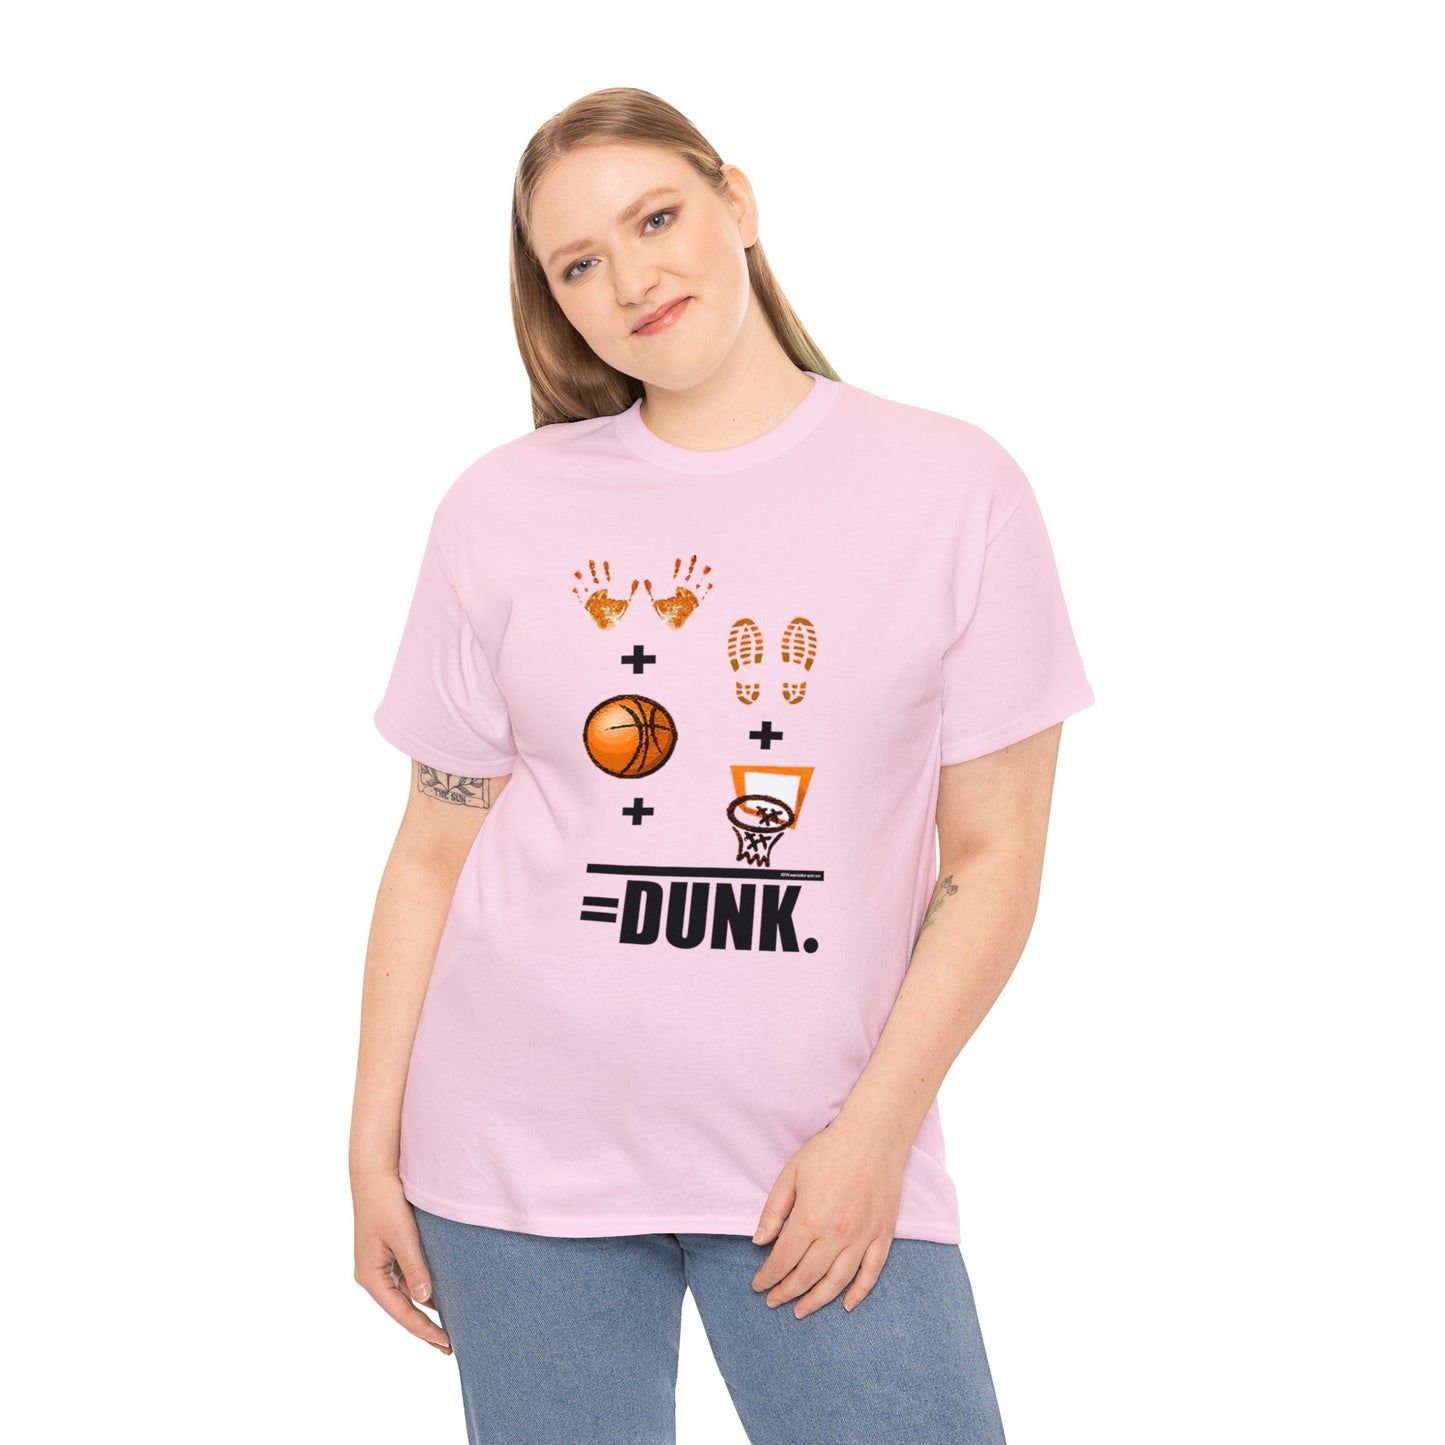 Basketball Equation, Basketball Math, Hands Plus Feet Plus Ball Plus Net Equals Dunk. Funny Basketball T-Shirt, Basketball Gift, Humorous